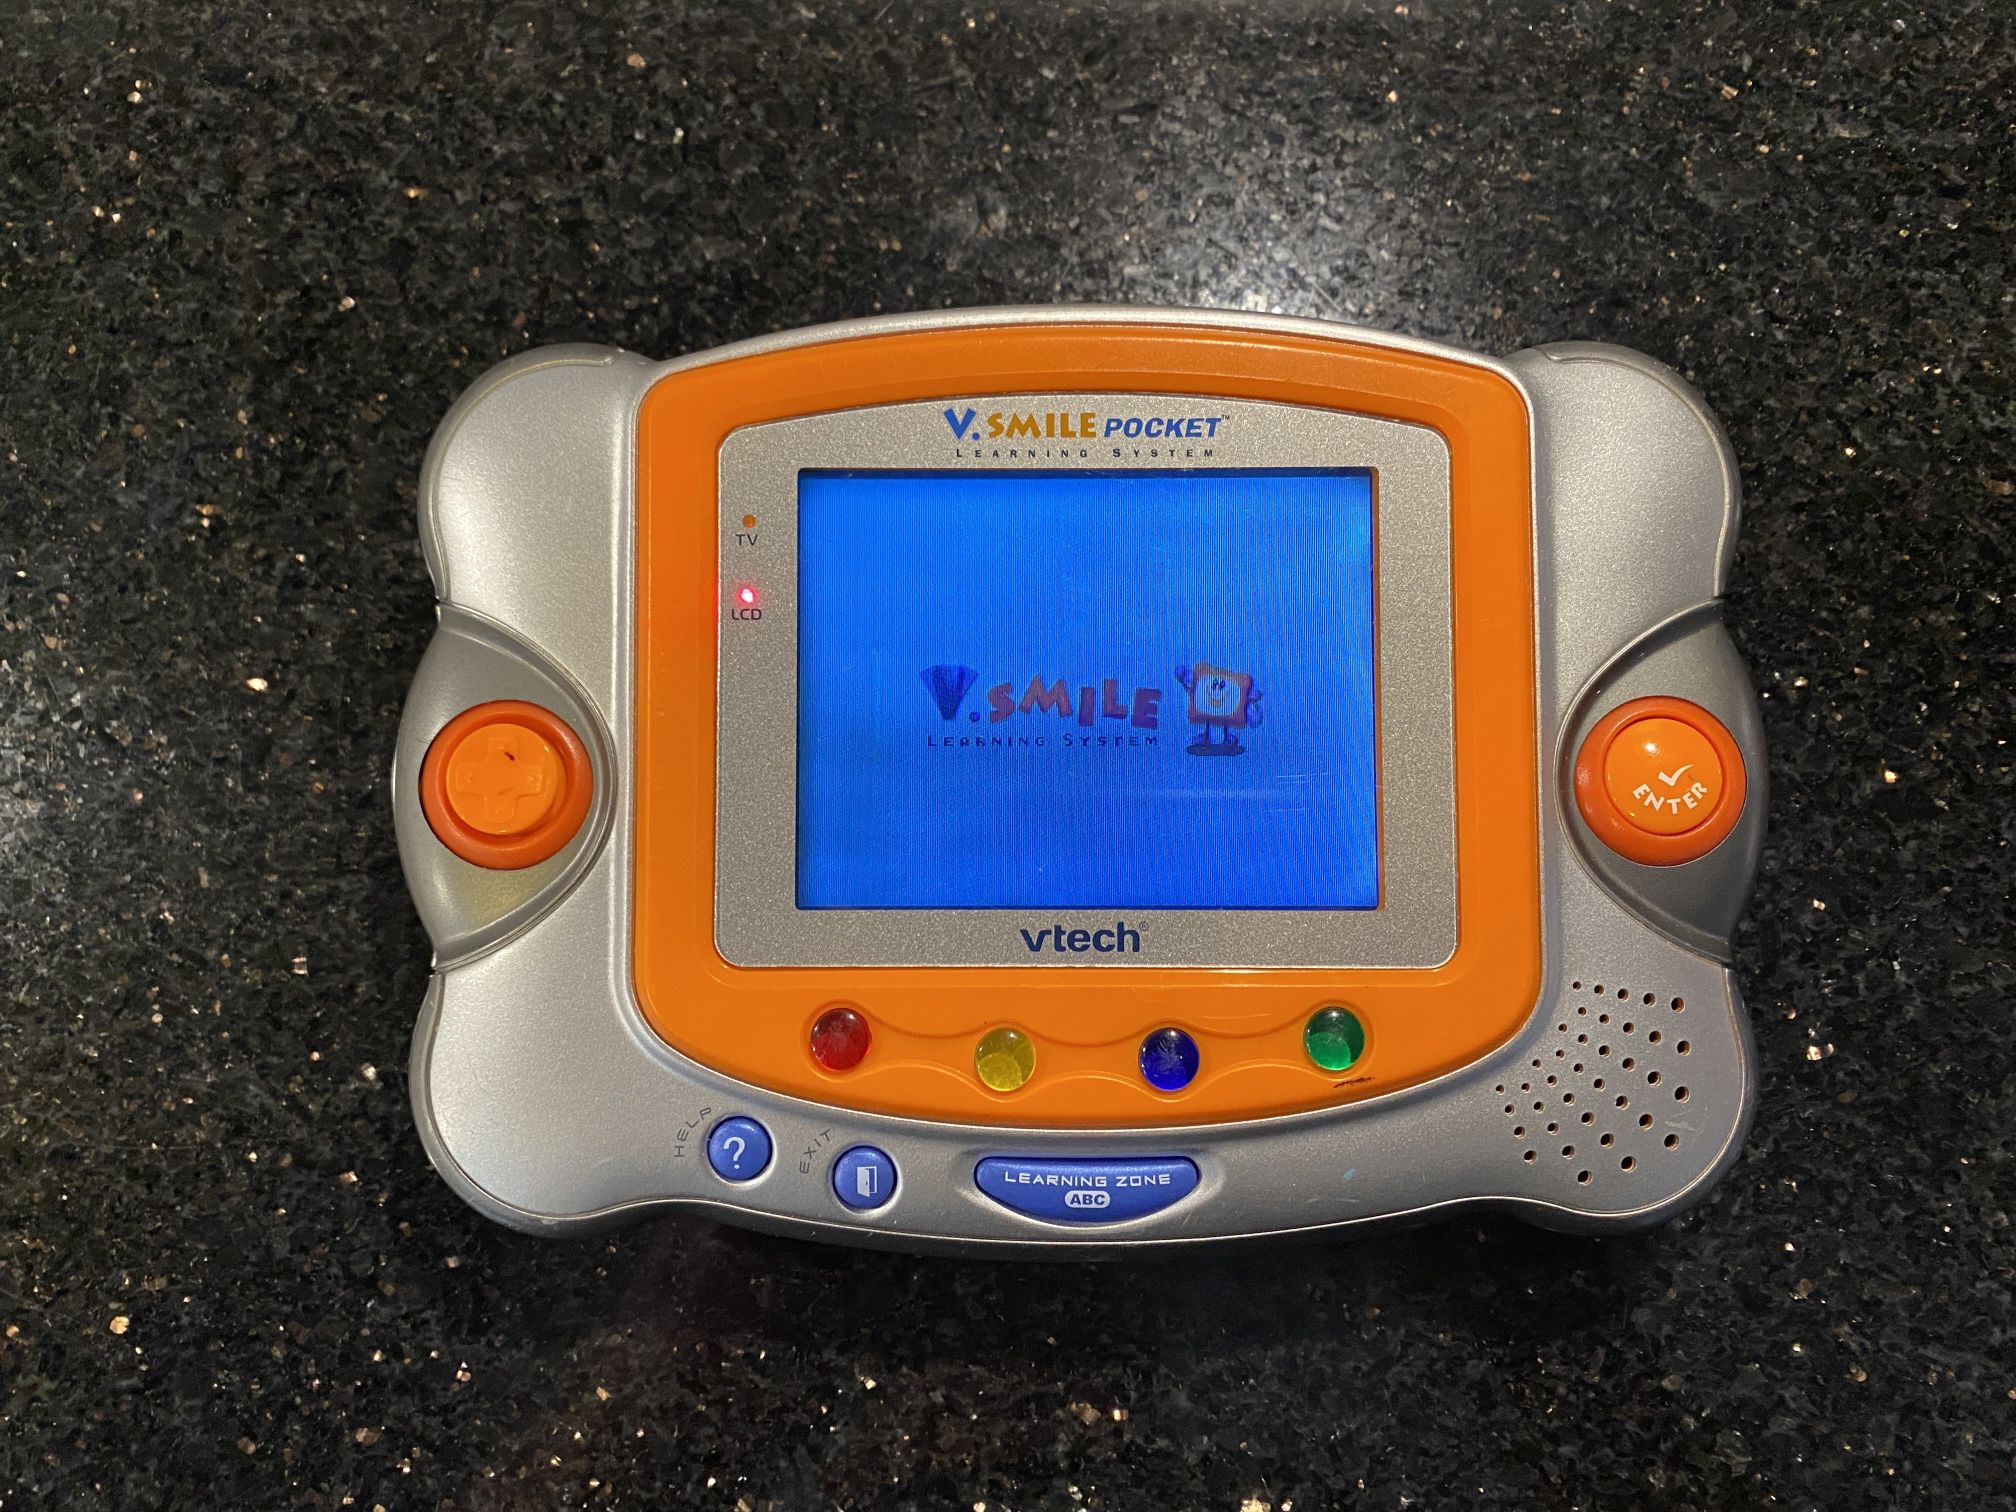 Vtech V Smile Pocket Learning System Portable Comes With 7 Games